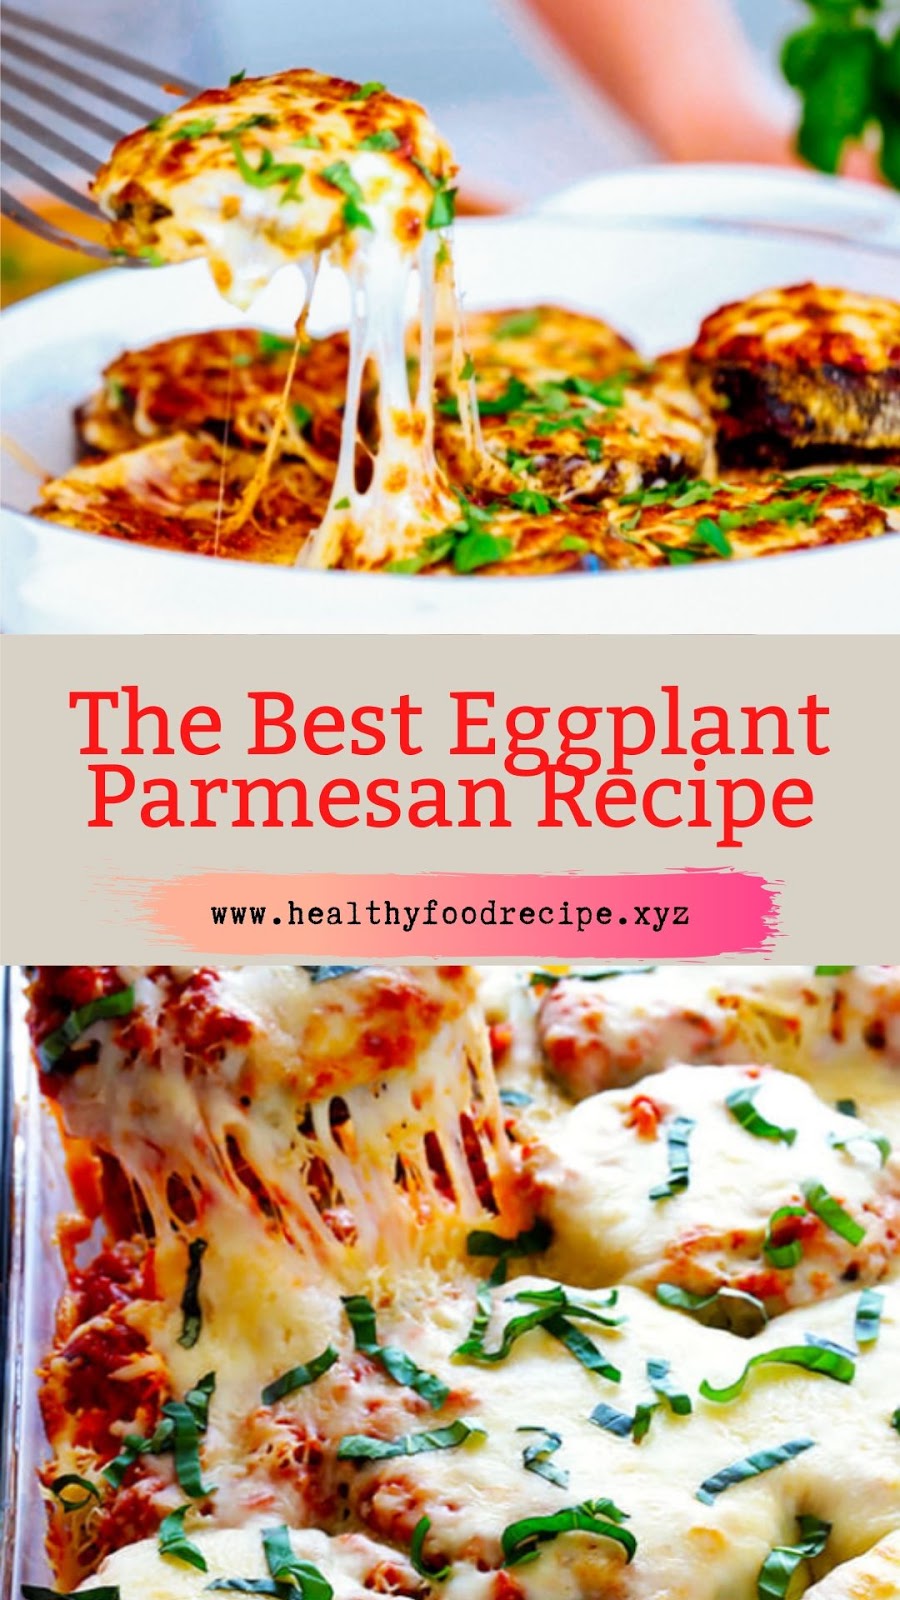 The Best Eggplant Parmesan Recipe